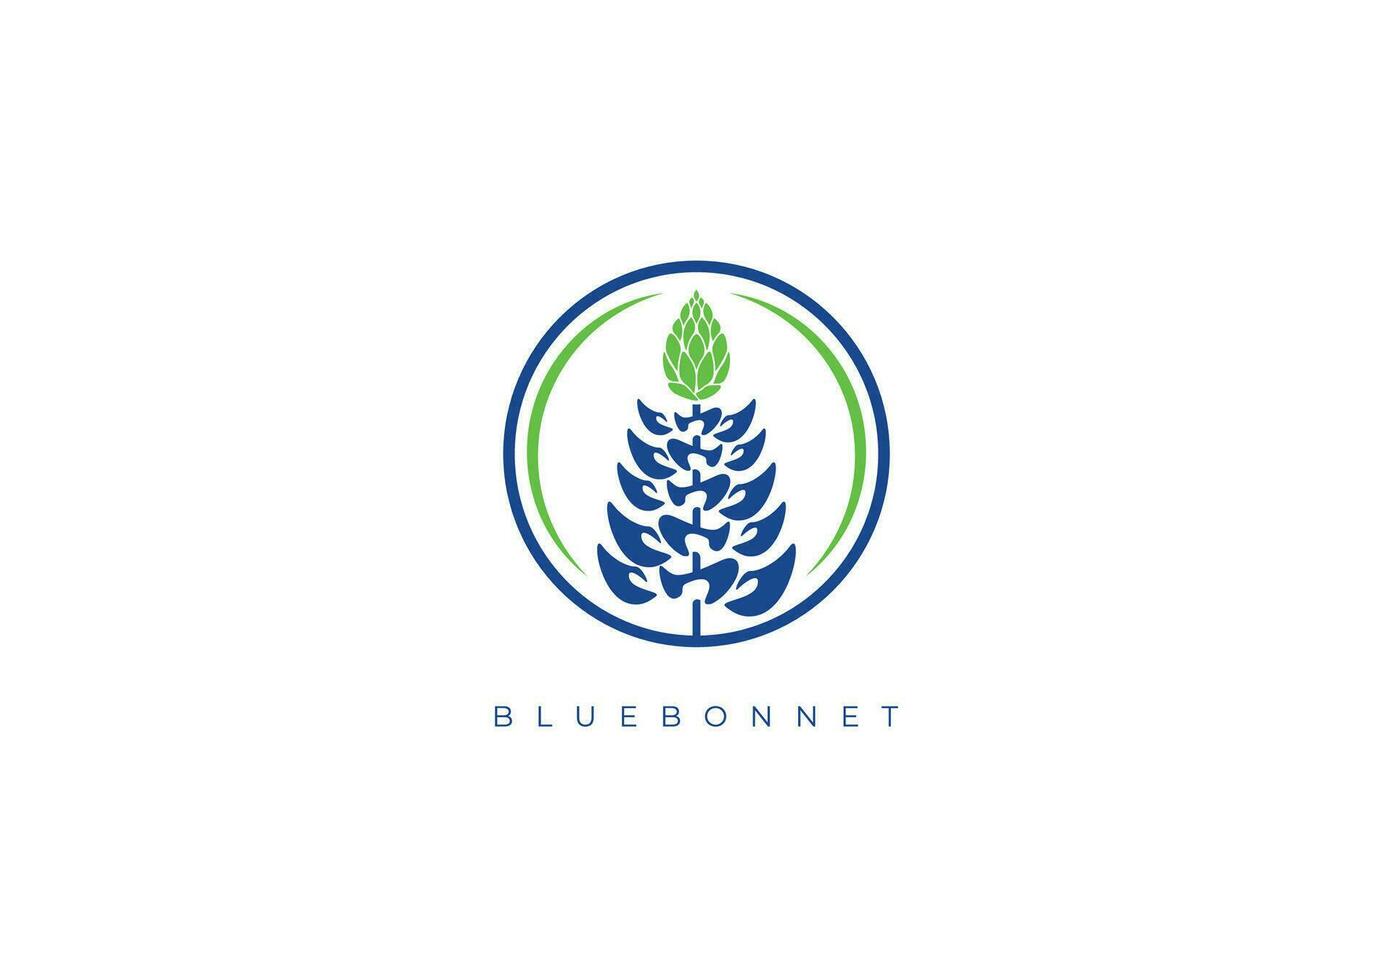 bluebonnet flor logo vector